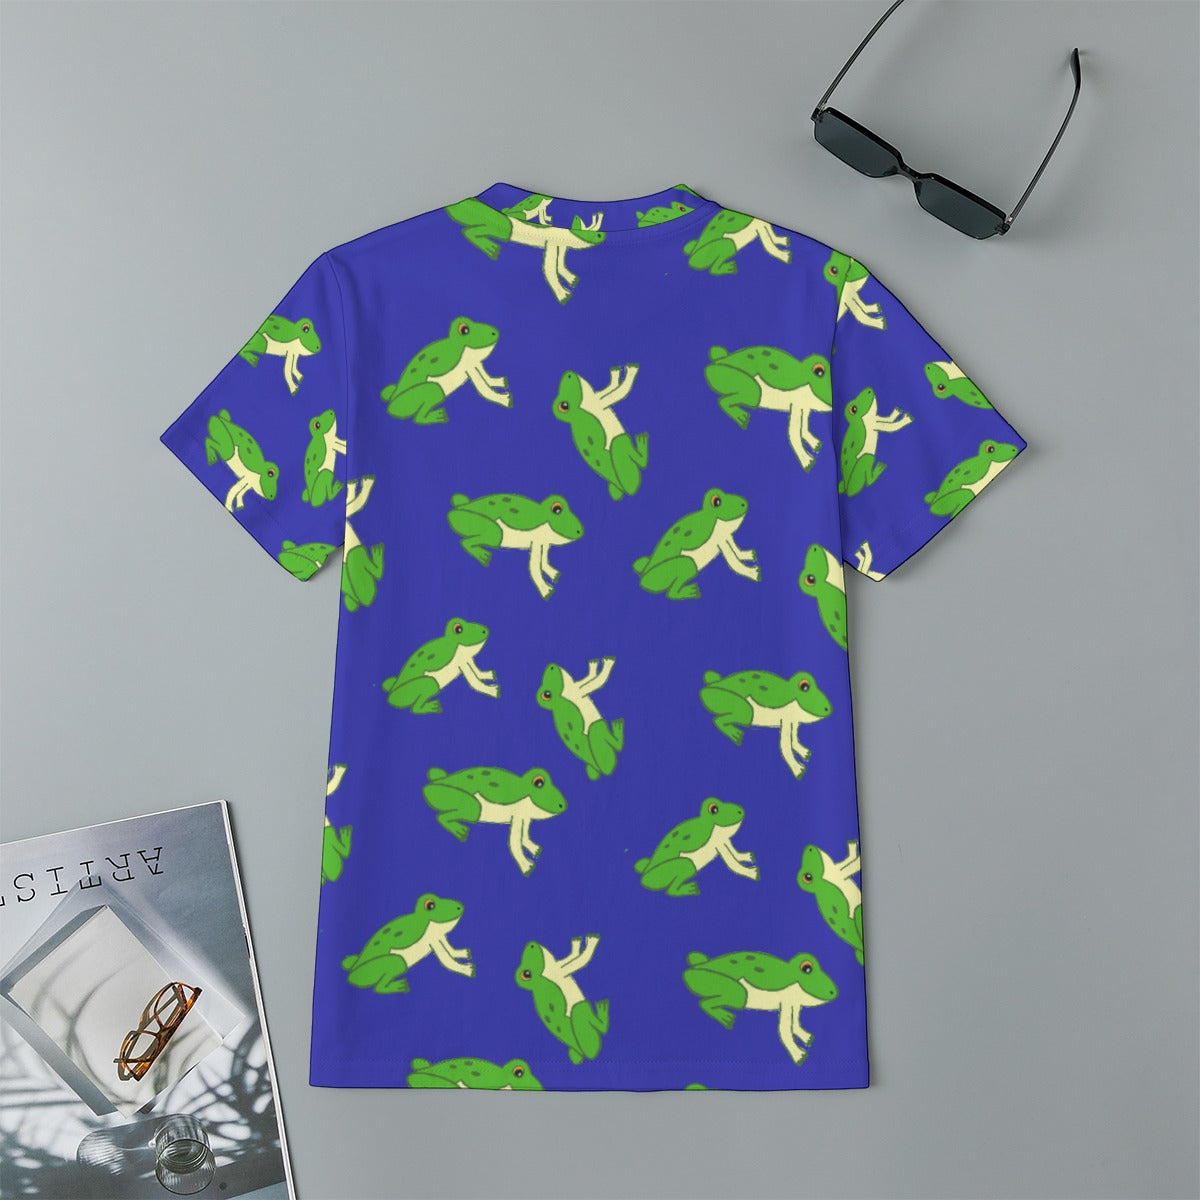 Boys Frog Shirt 100% Cotton - Clothes that Calm